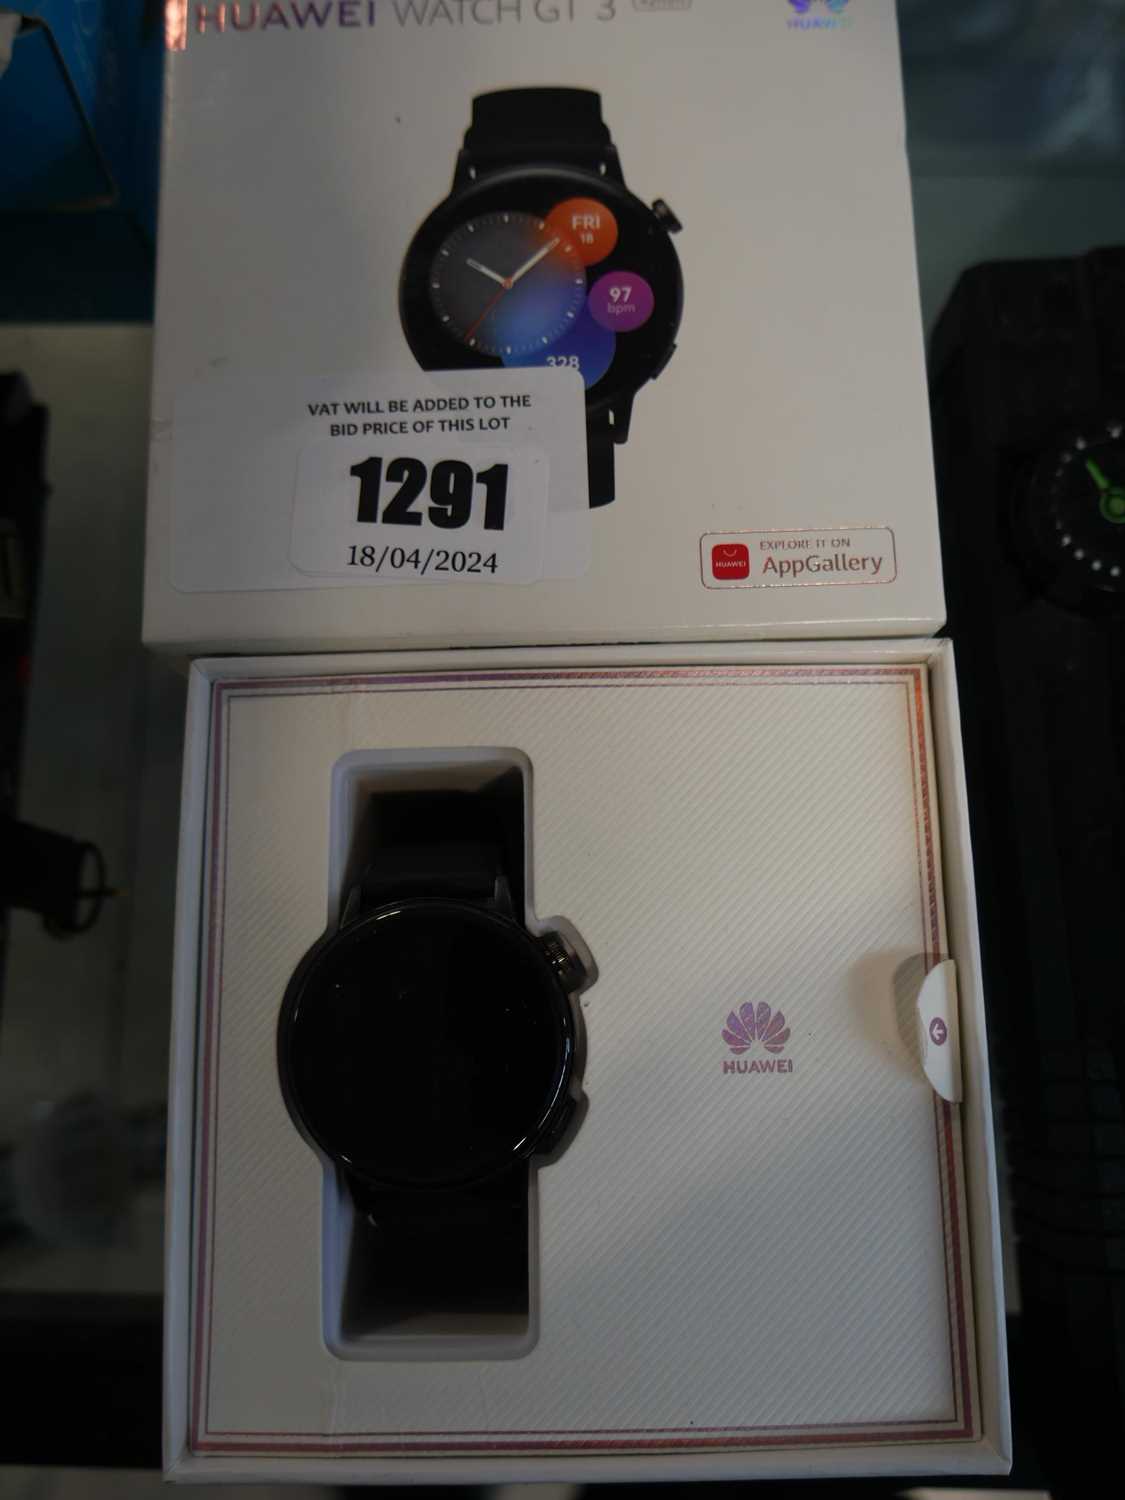 +VAT Huawei Watch GT3 - Image 2 of 2